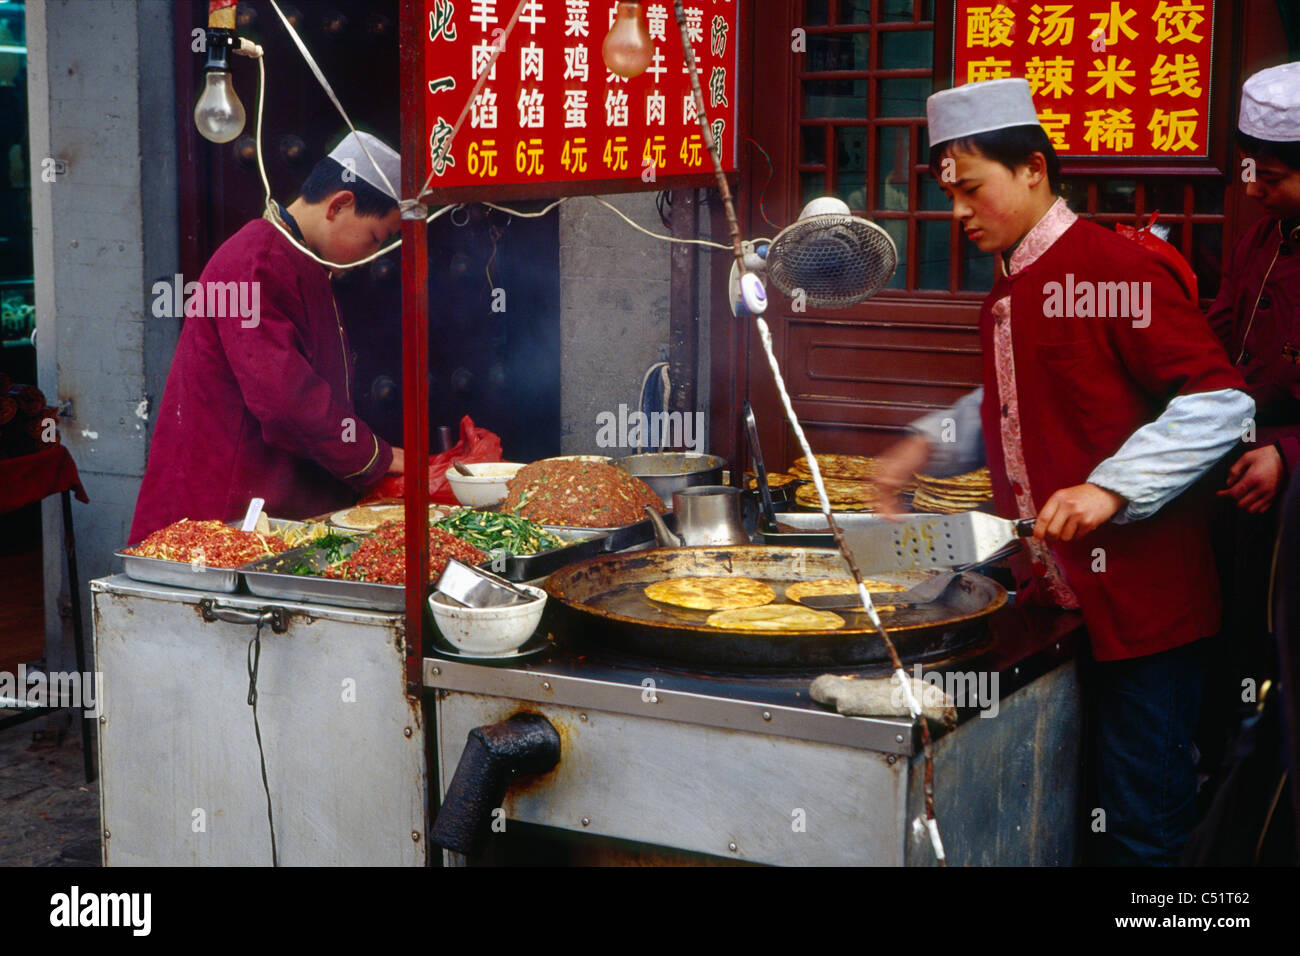 Cucina Outdoor su strada musulmana, Citta' di Xian, Cina Foto Stock